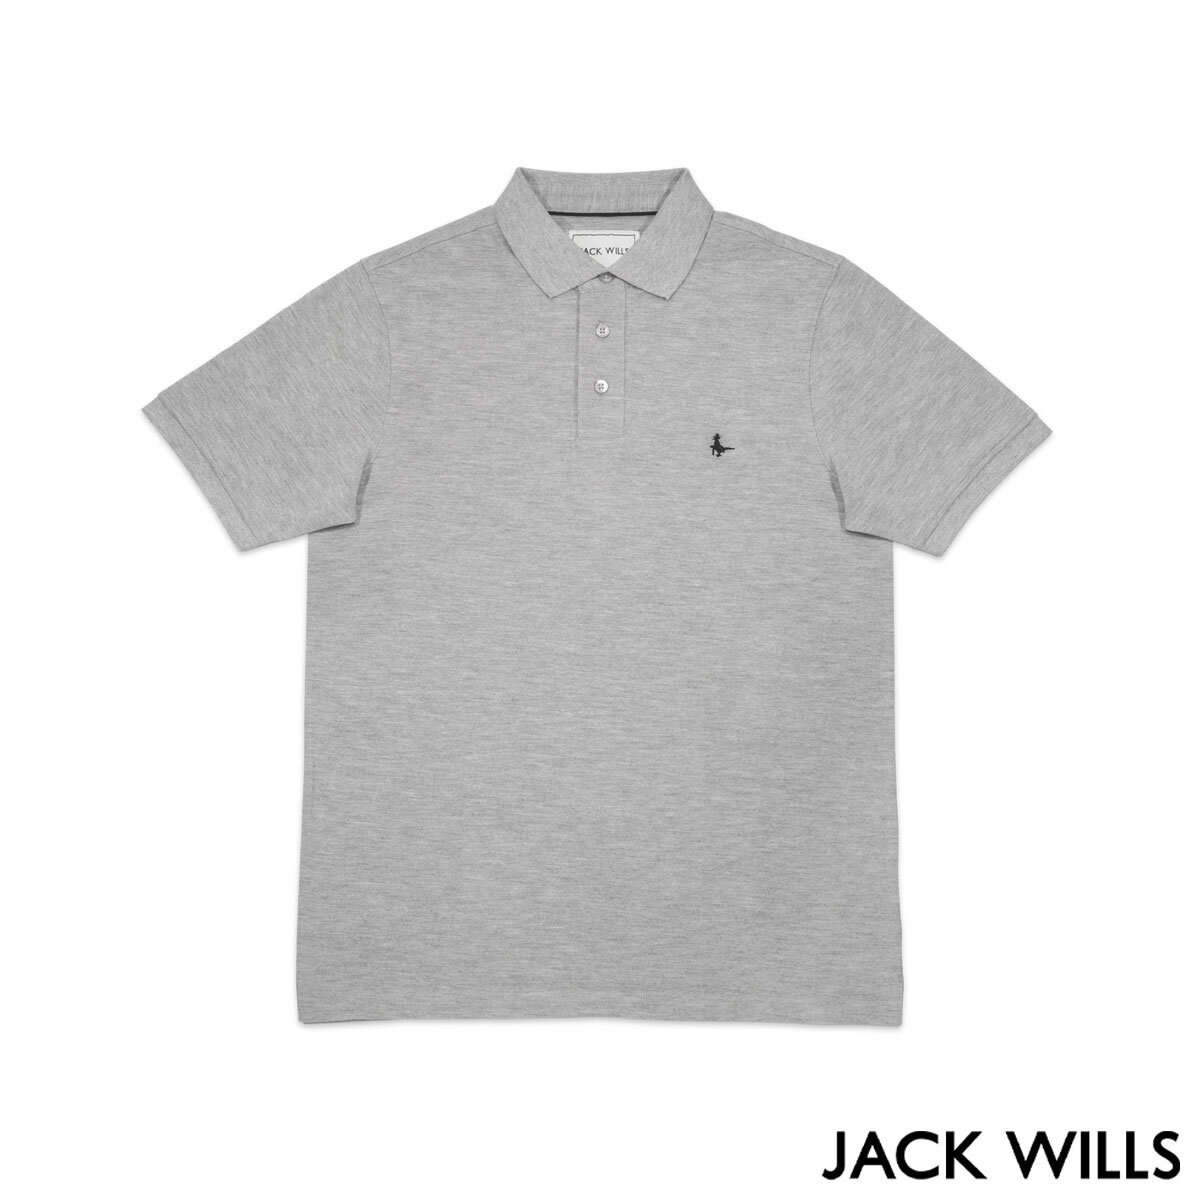 Jack Wills Men's Polo Shirt in Grey